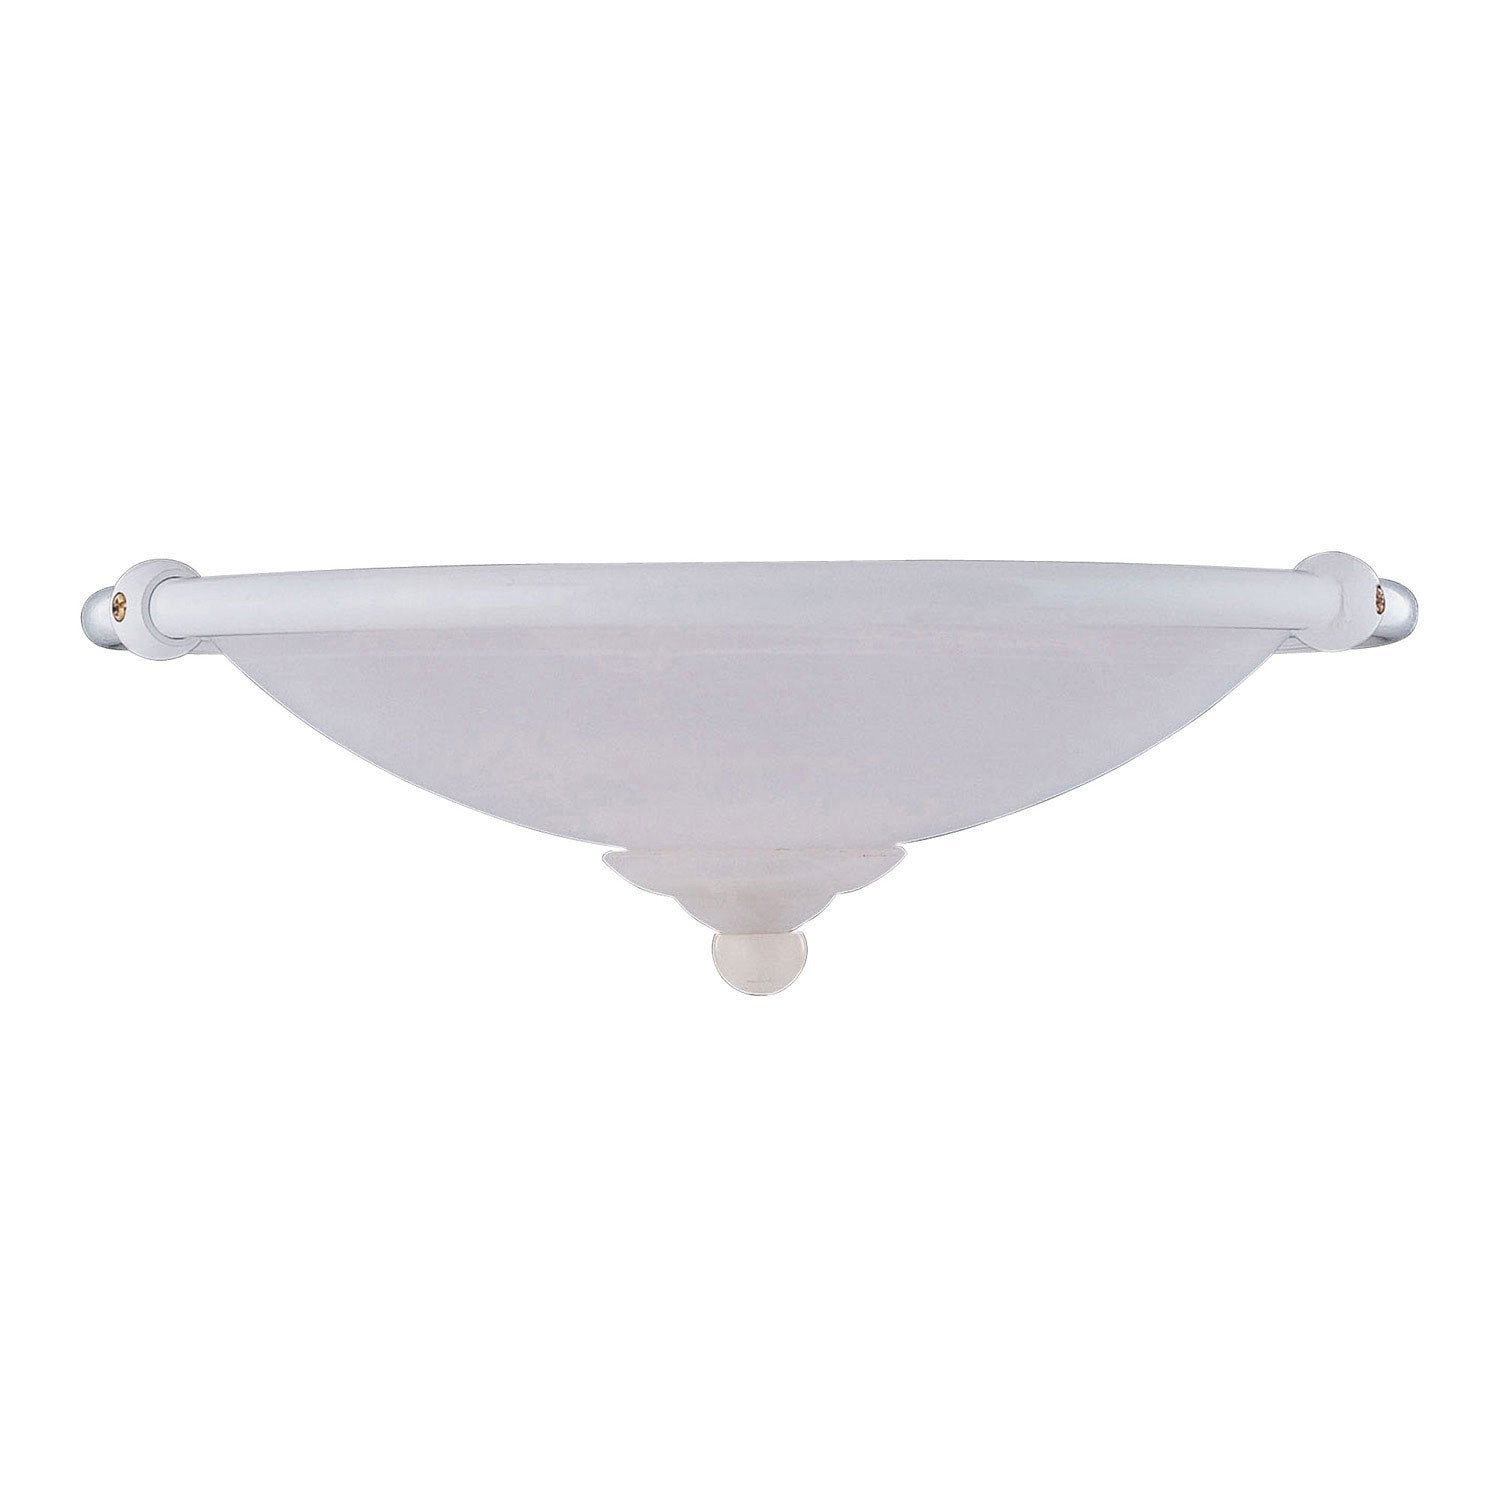 Concord Fans 3 Light White Finish Low Profile Ceiling Fan Light Kit